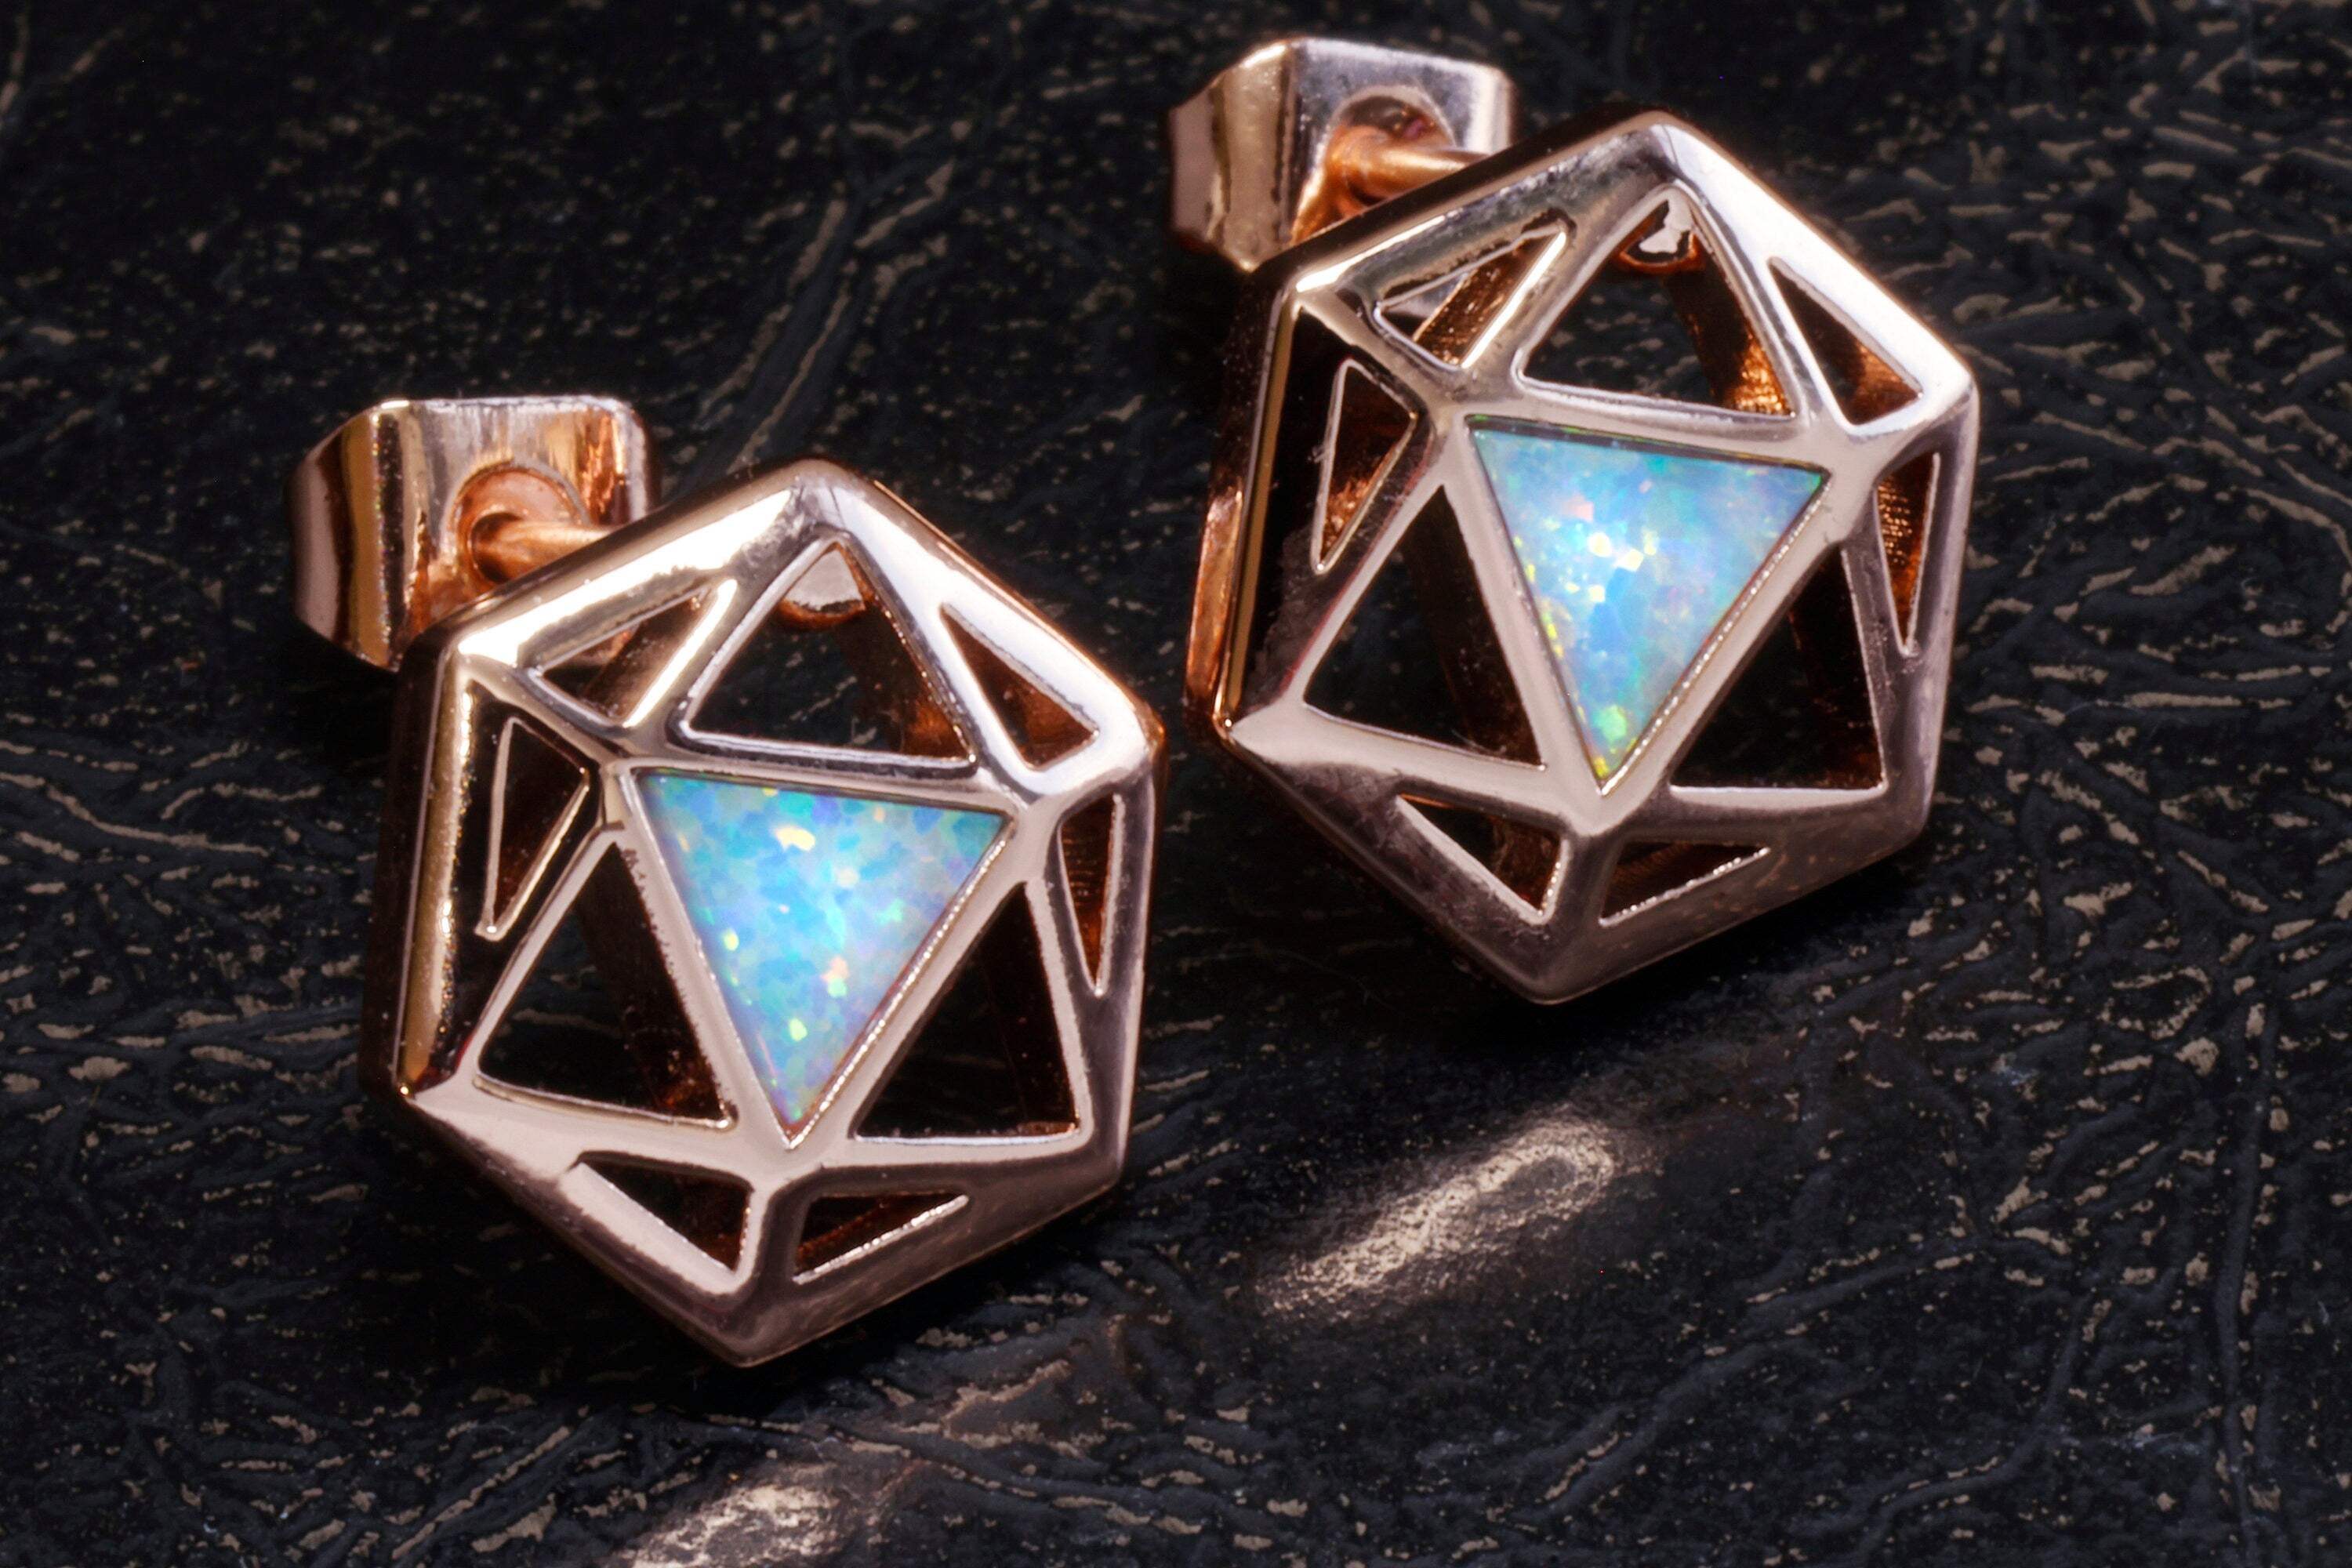 D20 Dice stud earrings, Rose gold dice earrings with light blue opal